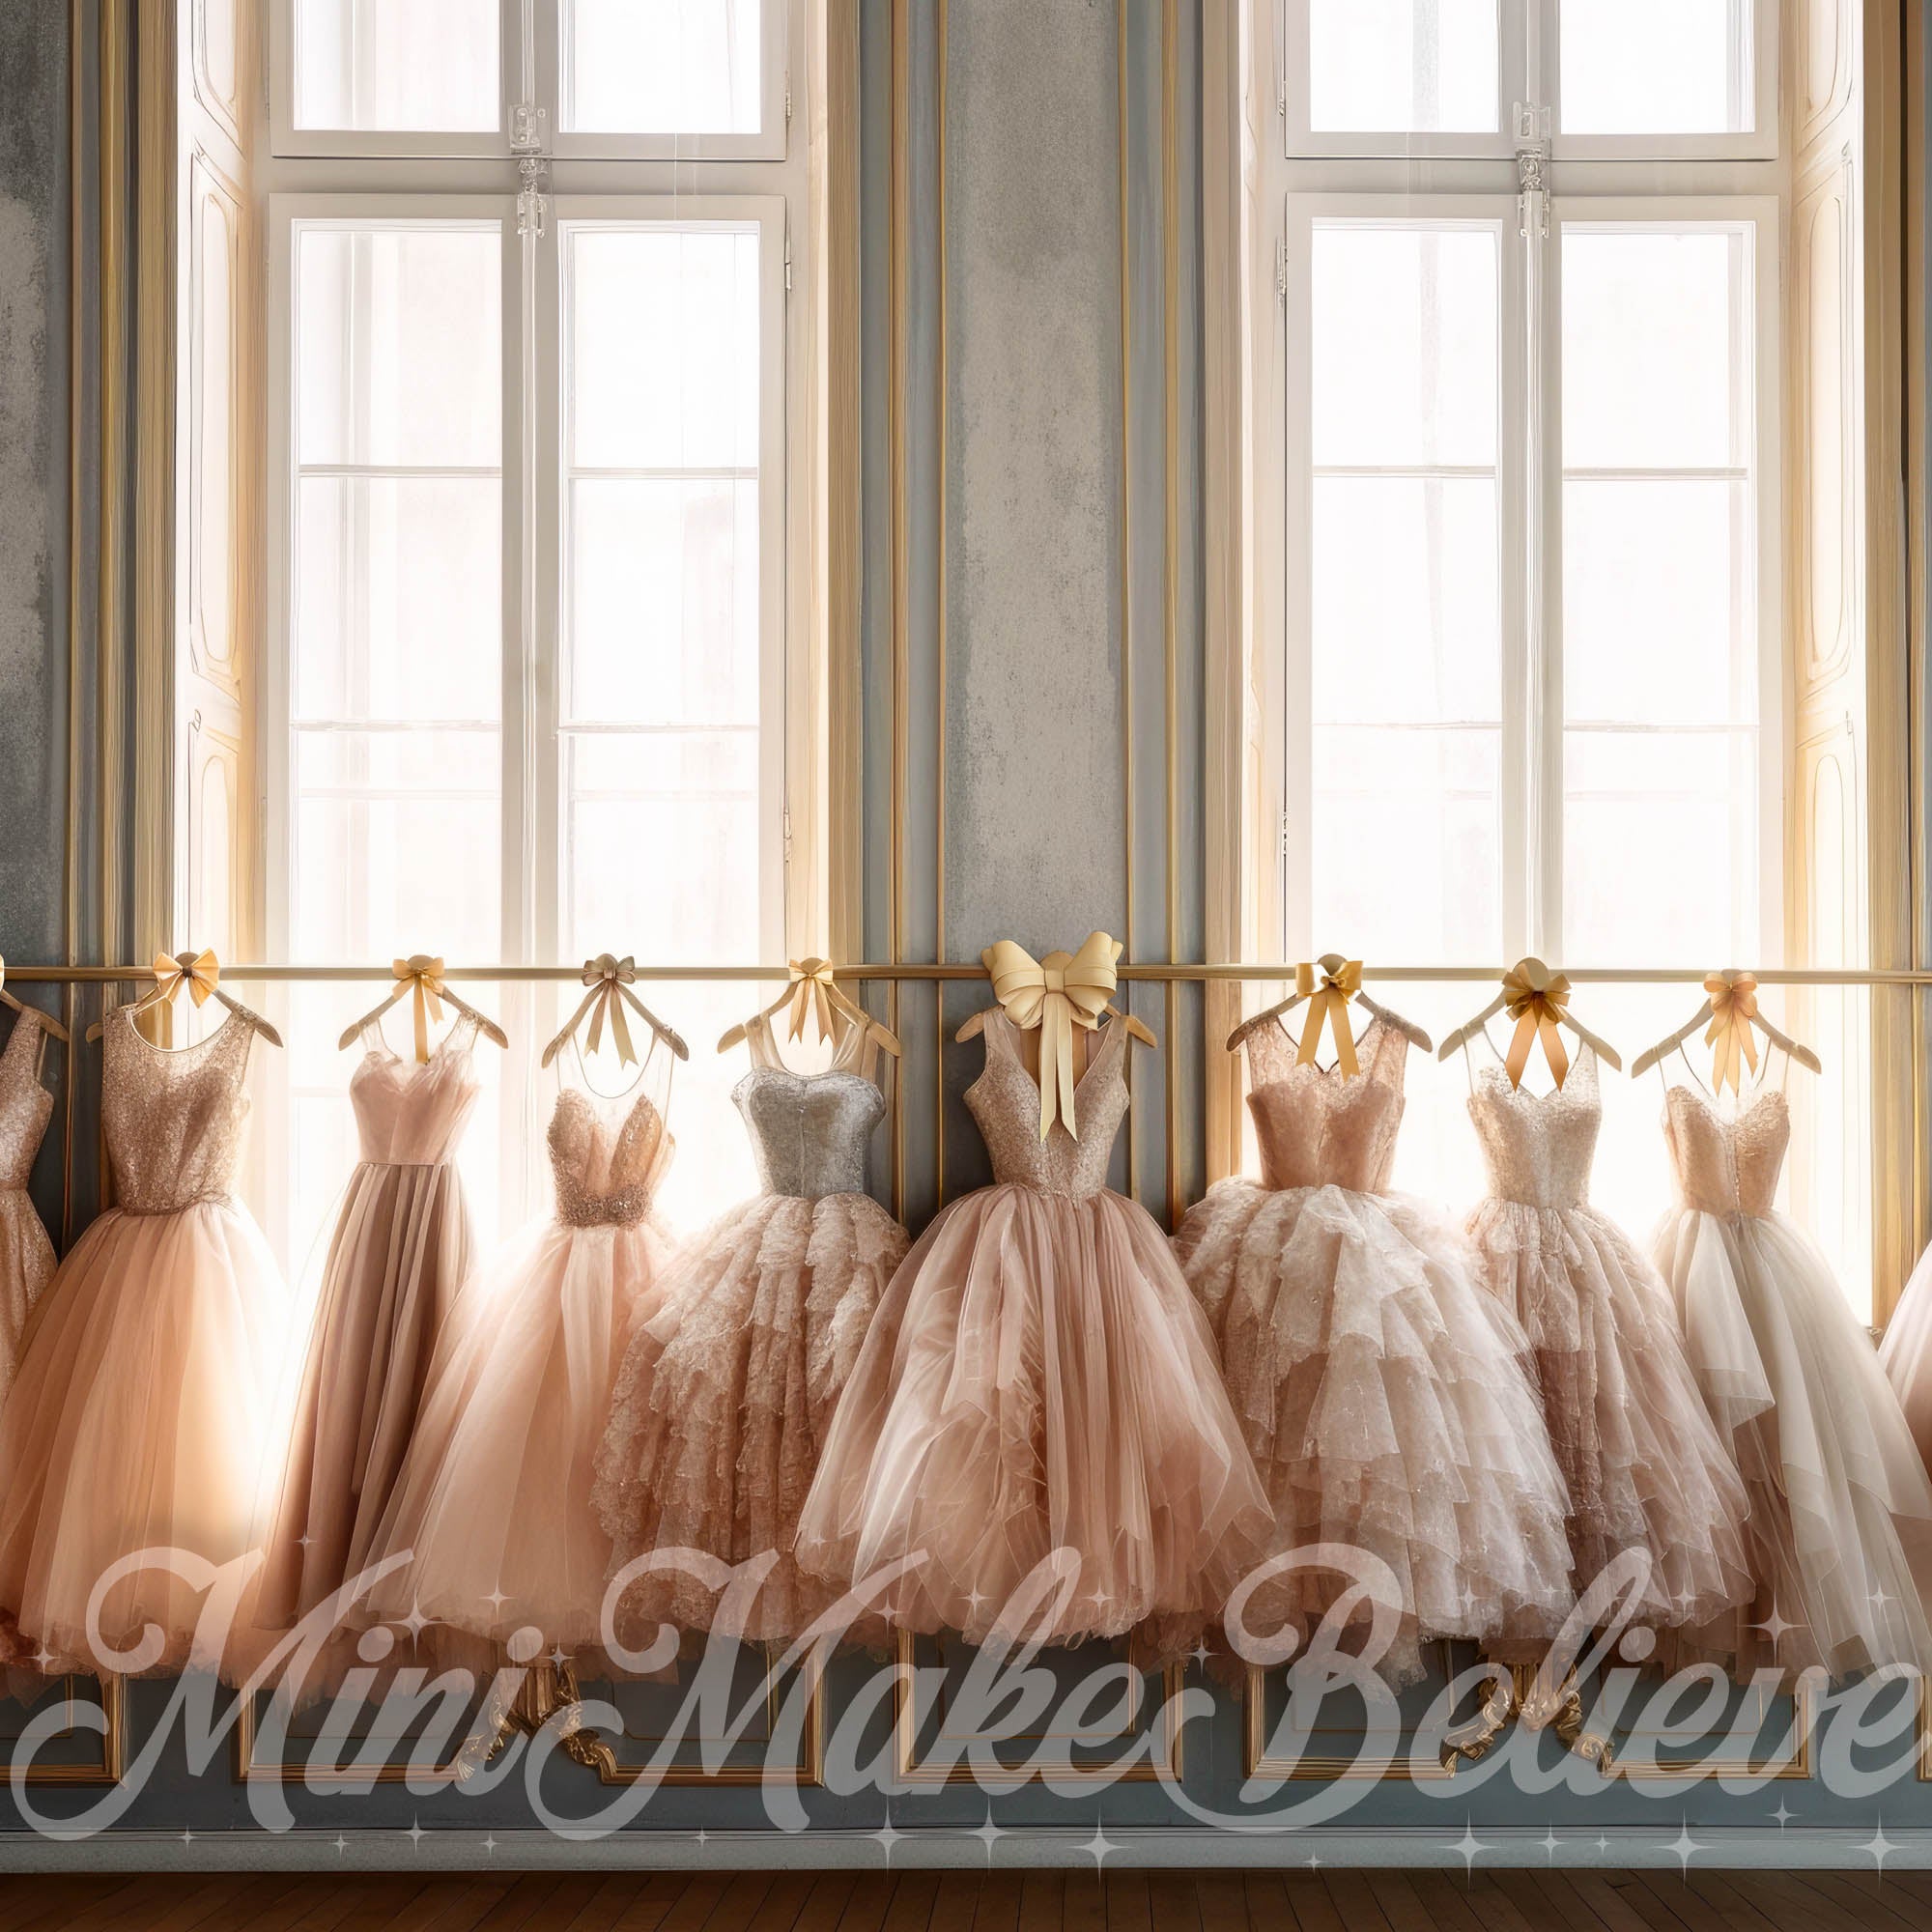 Kate Valentine Ballet Dresses in studio Backdrop Designed by Mini MakeBelieve